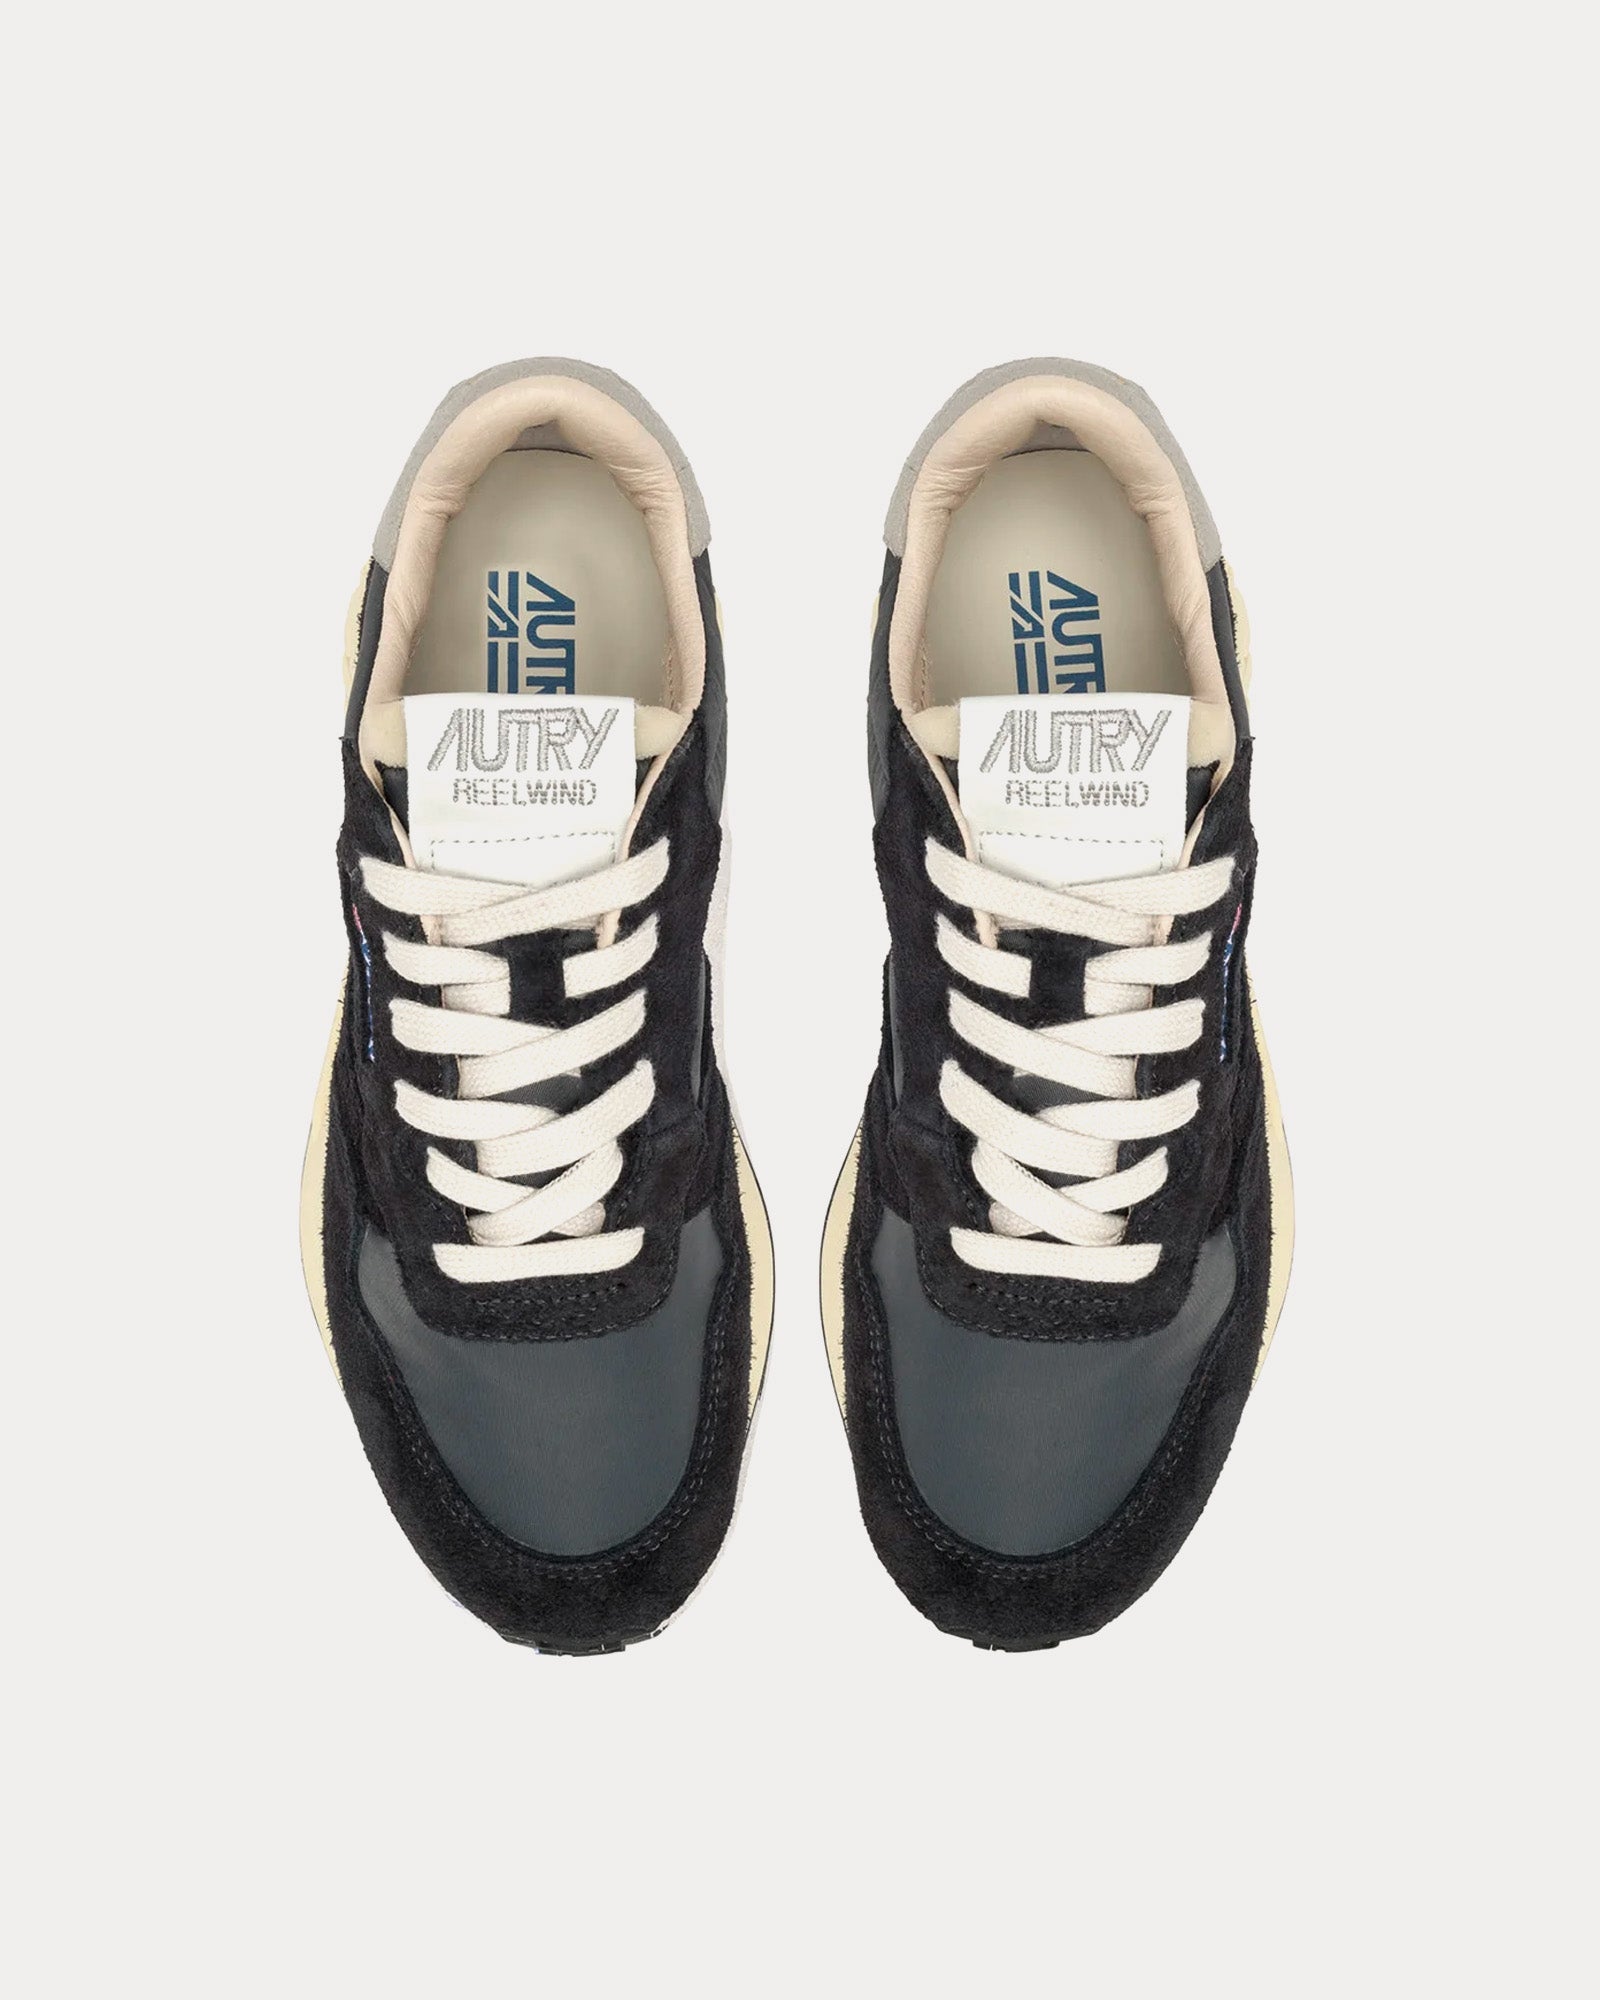 Autry - Reelwind Nylon & Suede Black Low Top Sneakers